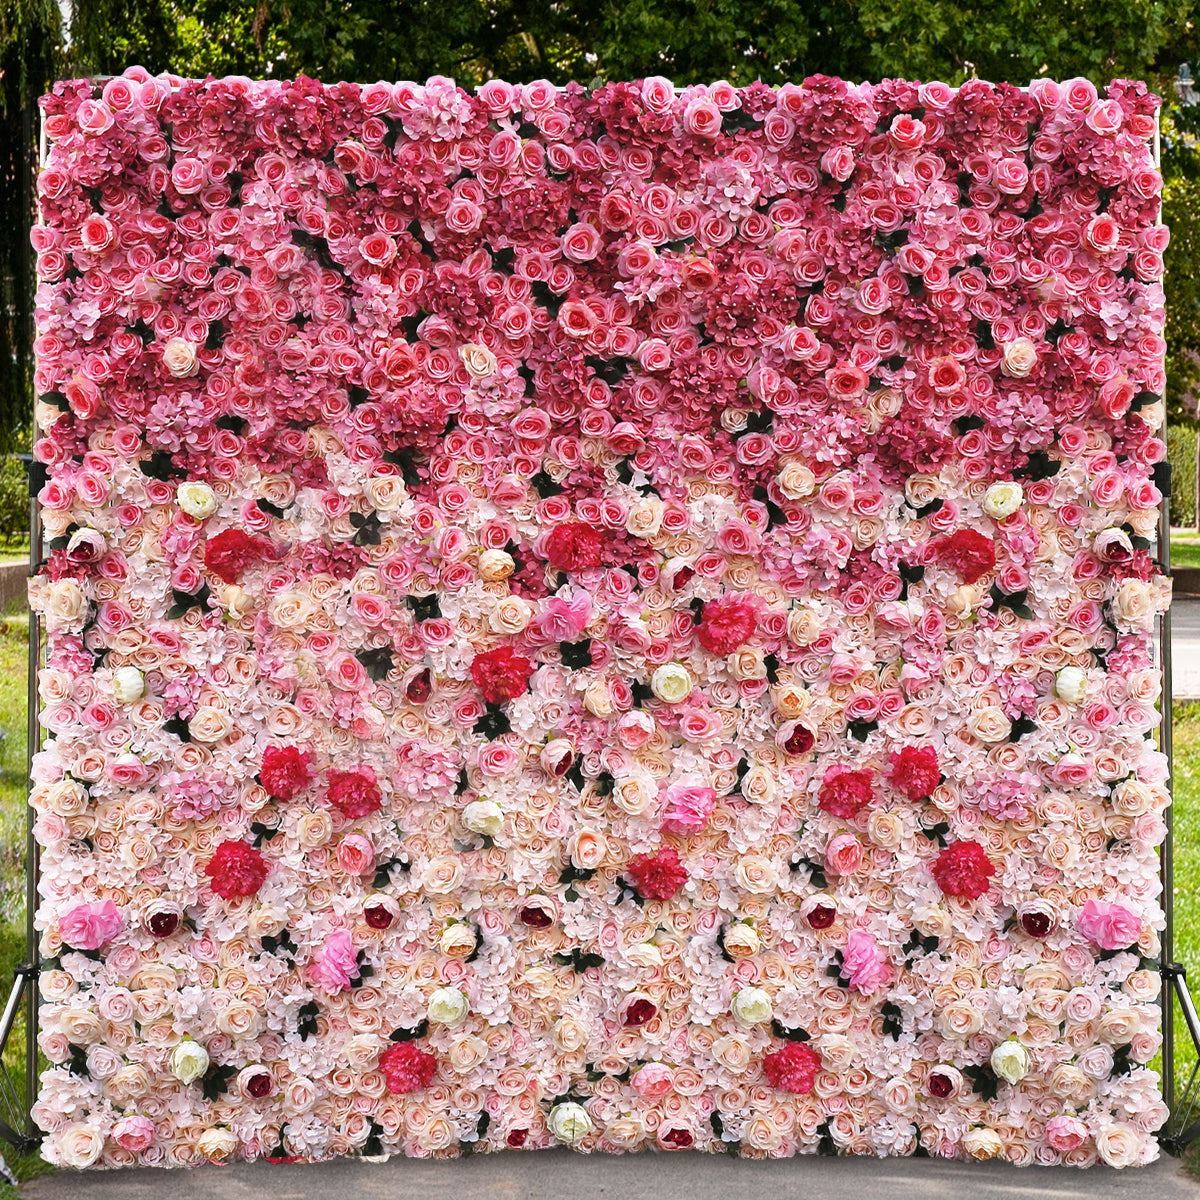 5D Artificial Flower Wall Arrangement Wedding Party Birthday Backdrop Decor HQ9013